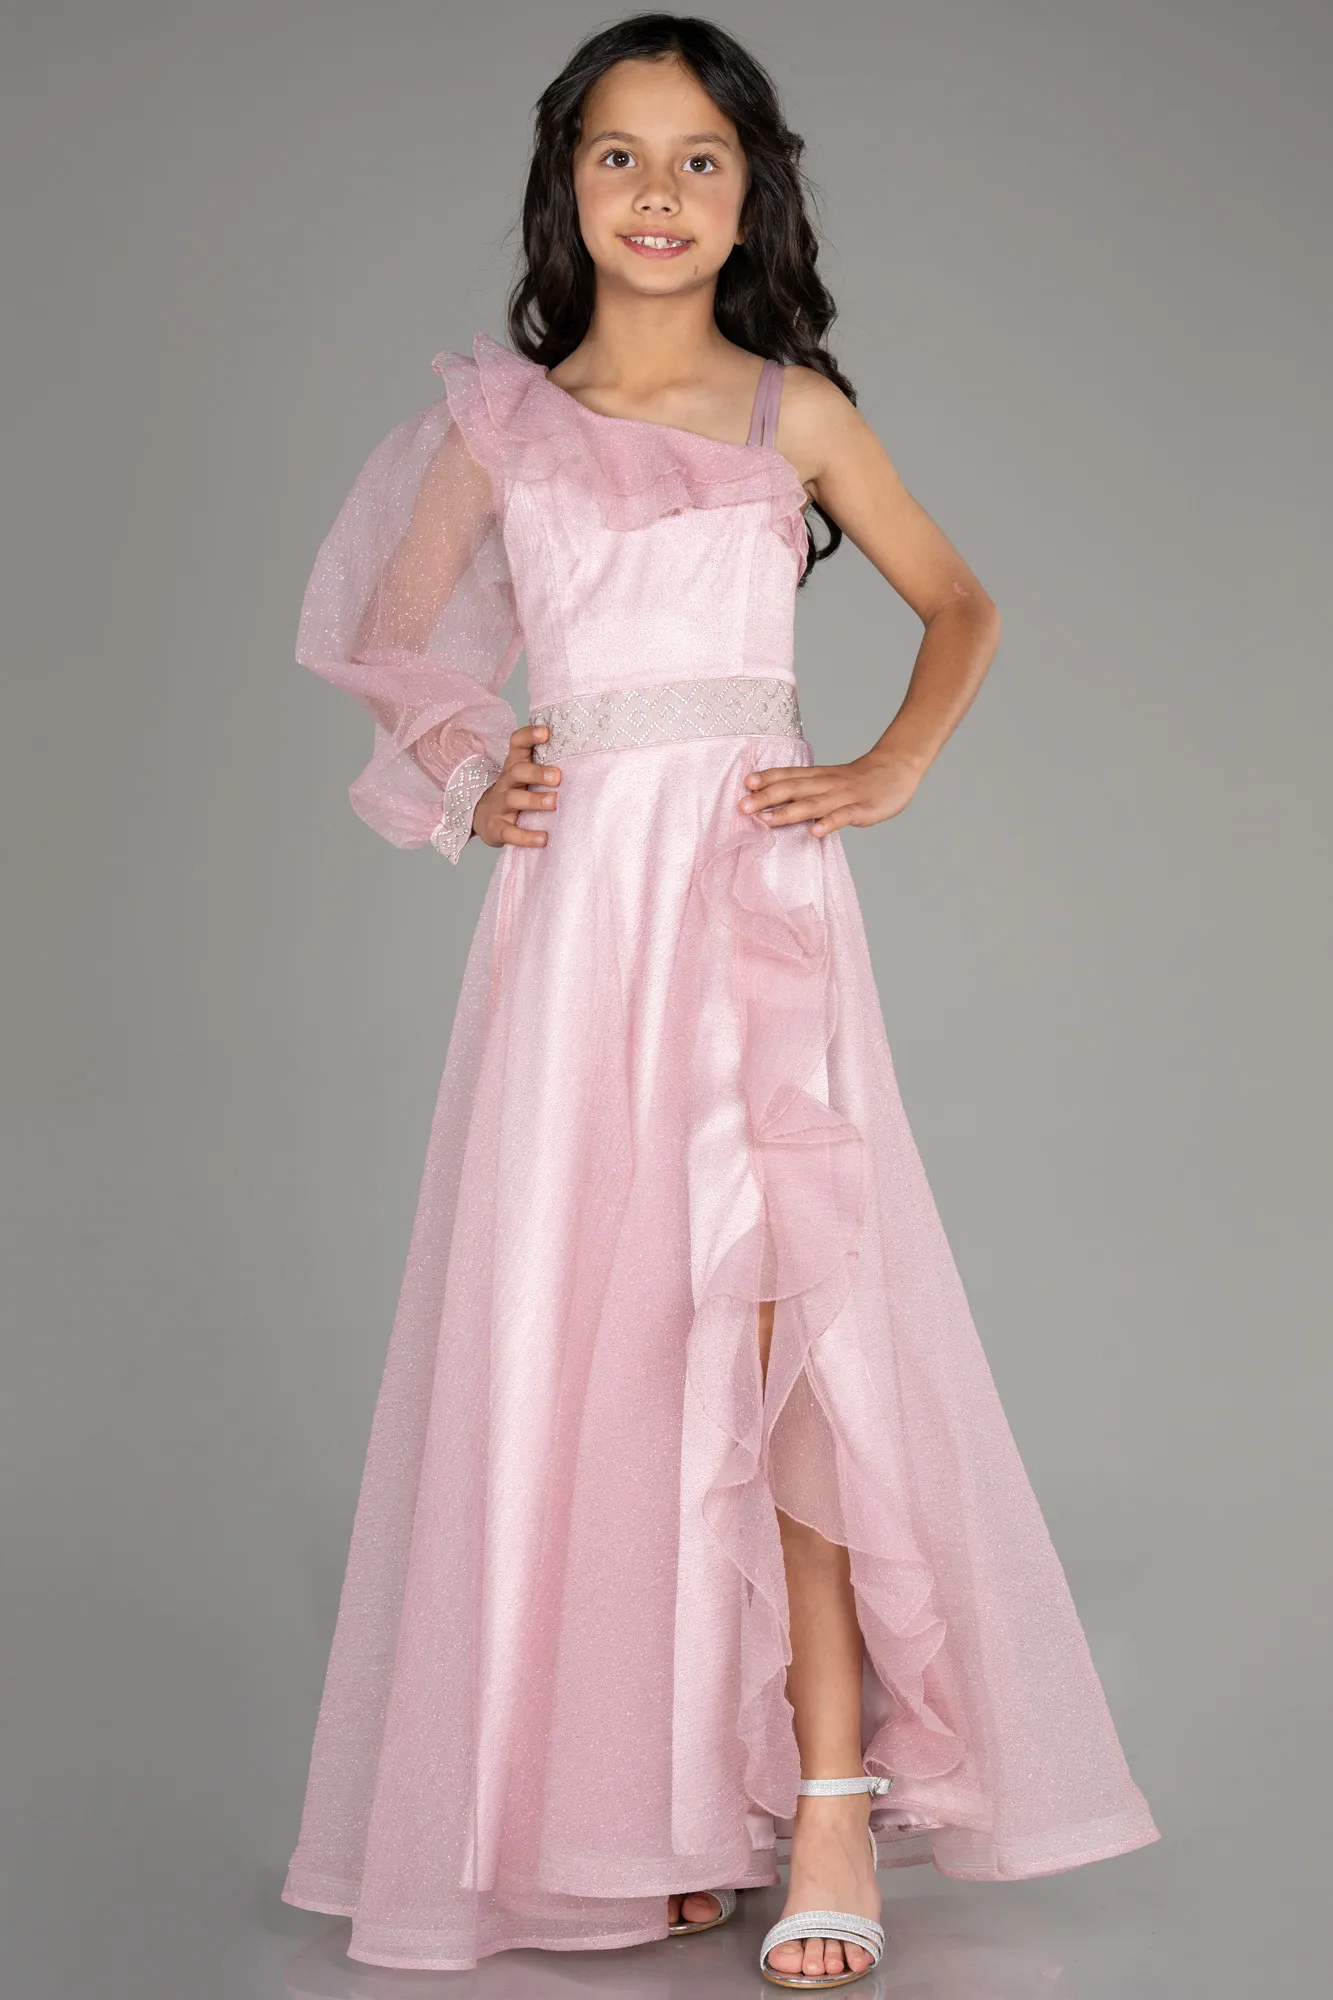 Powder Color-Long Girl Dress ABU2453